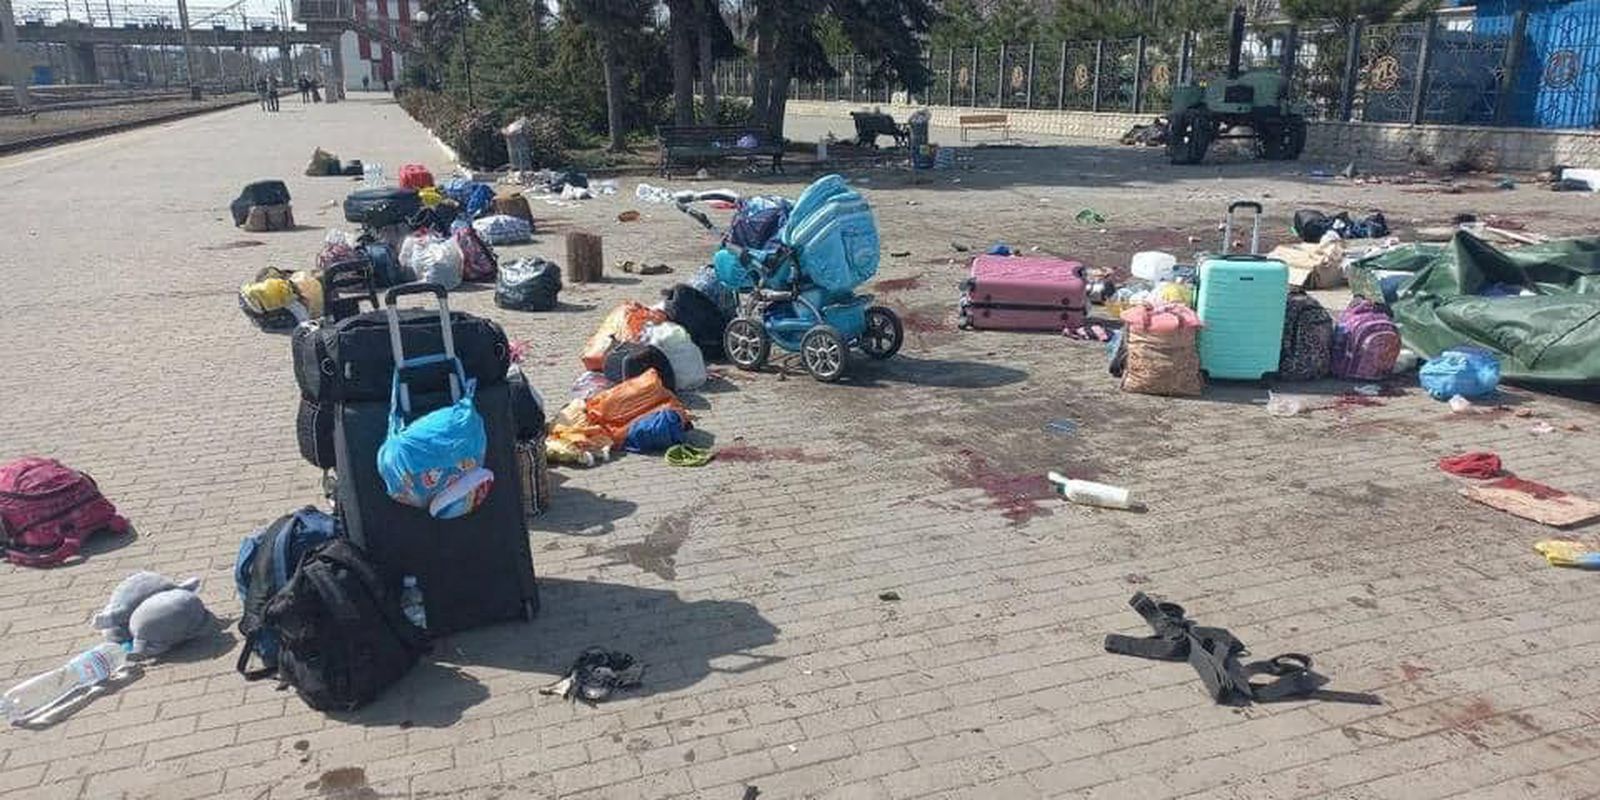 Ukraine says 50 killed in railway station attack